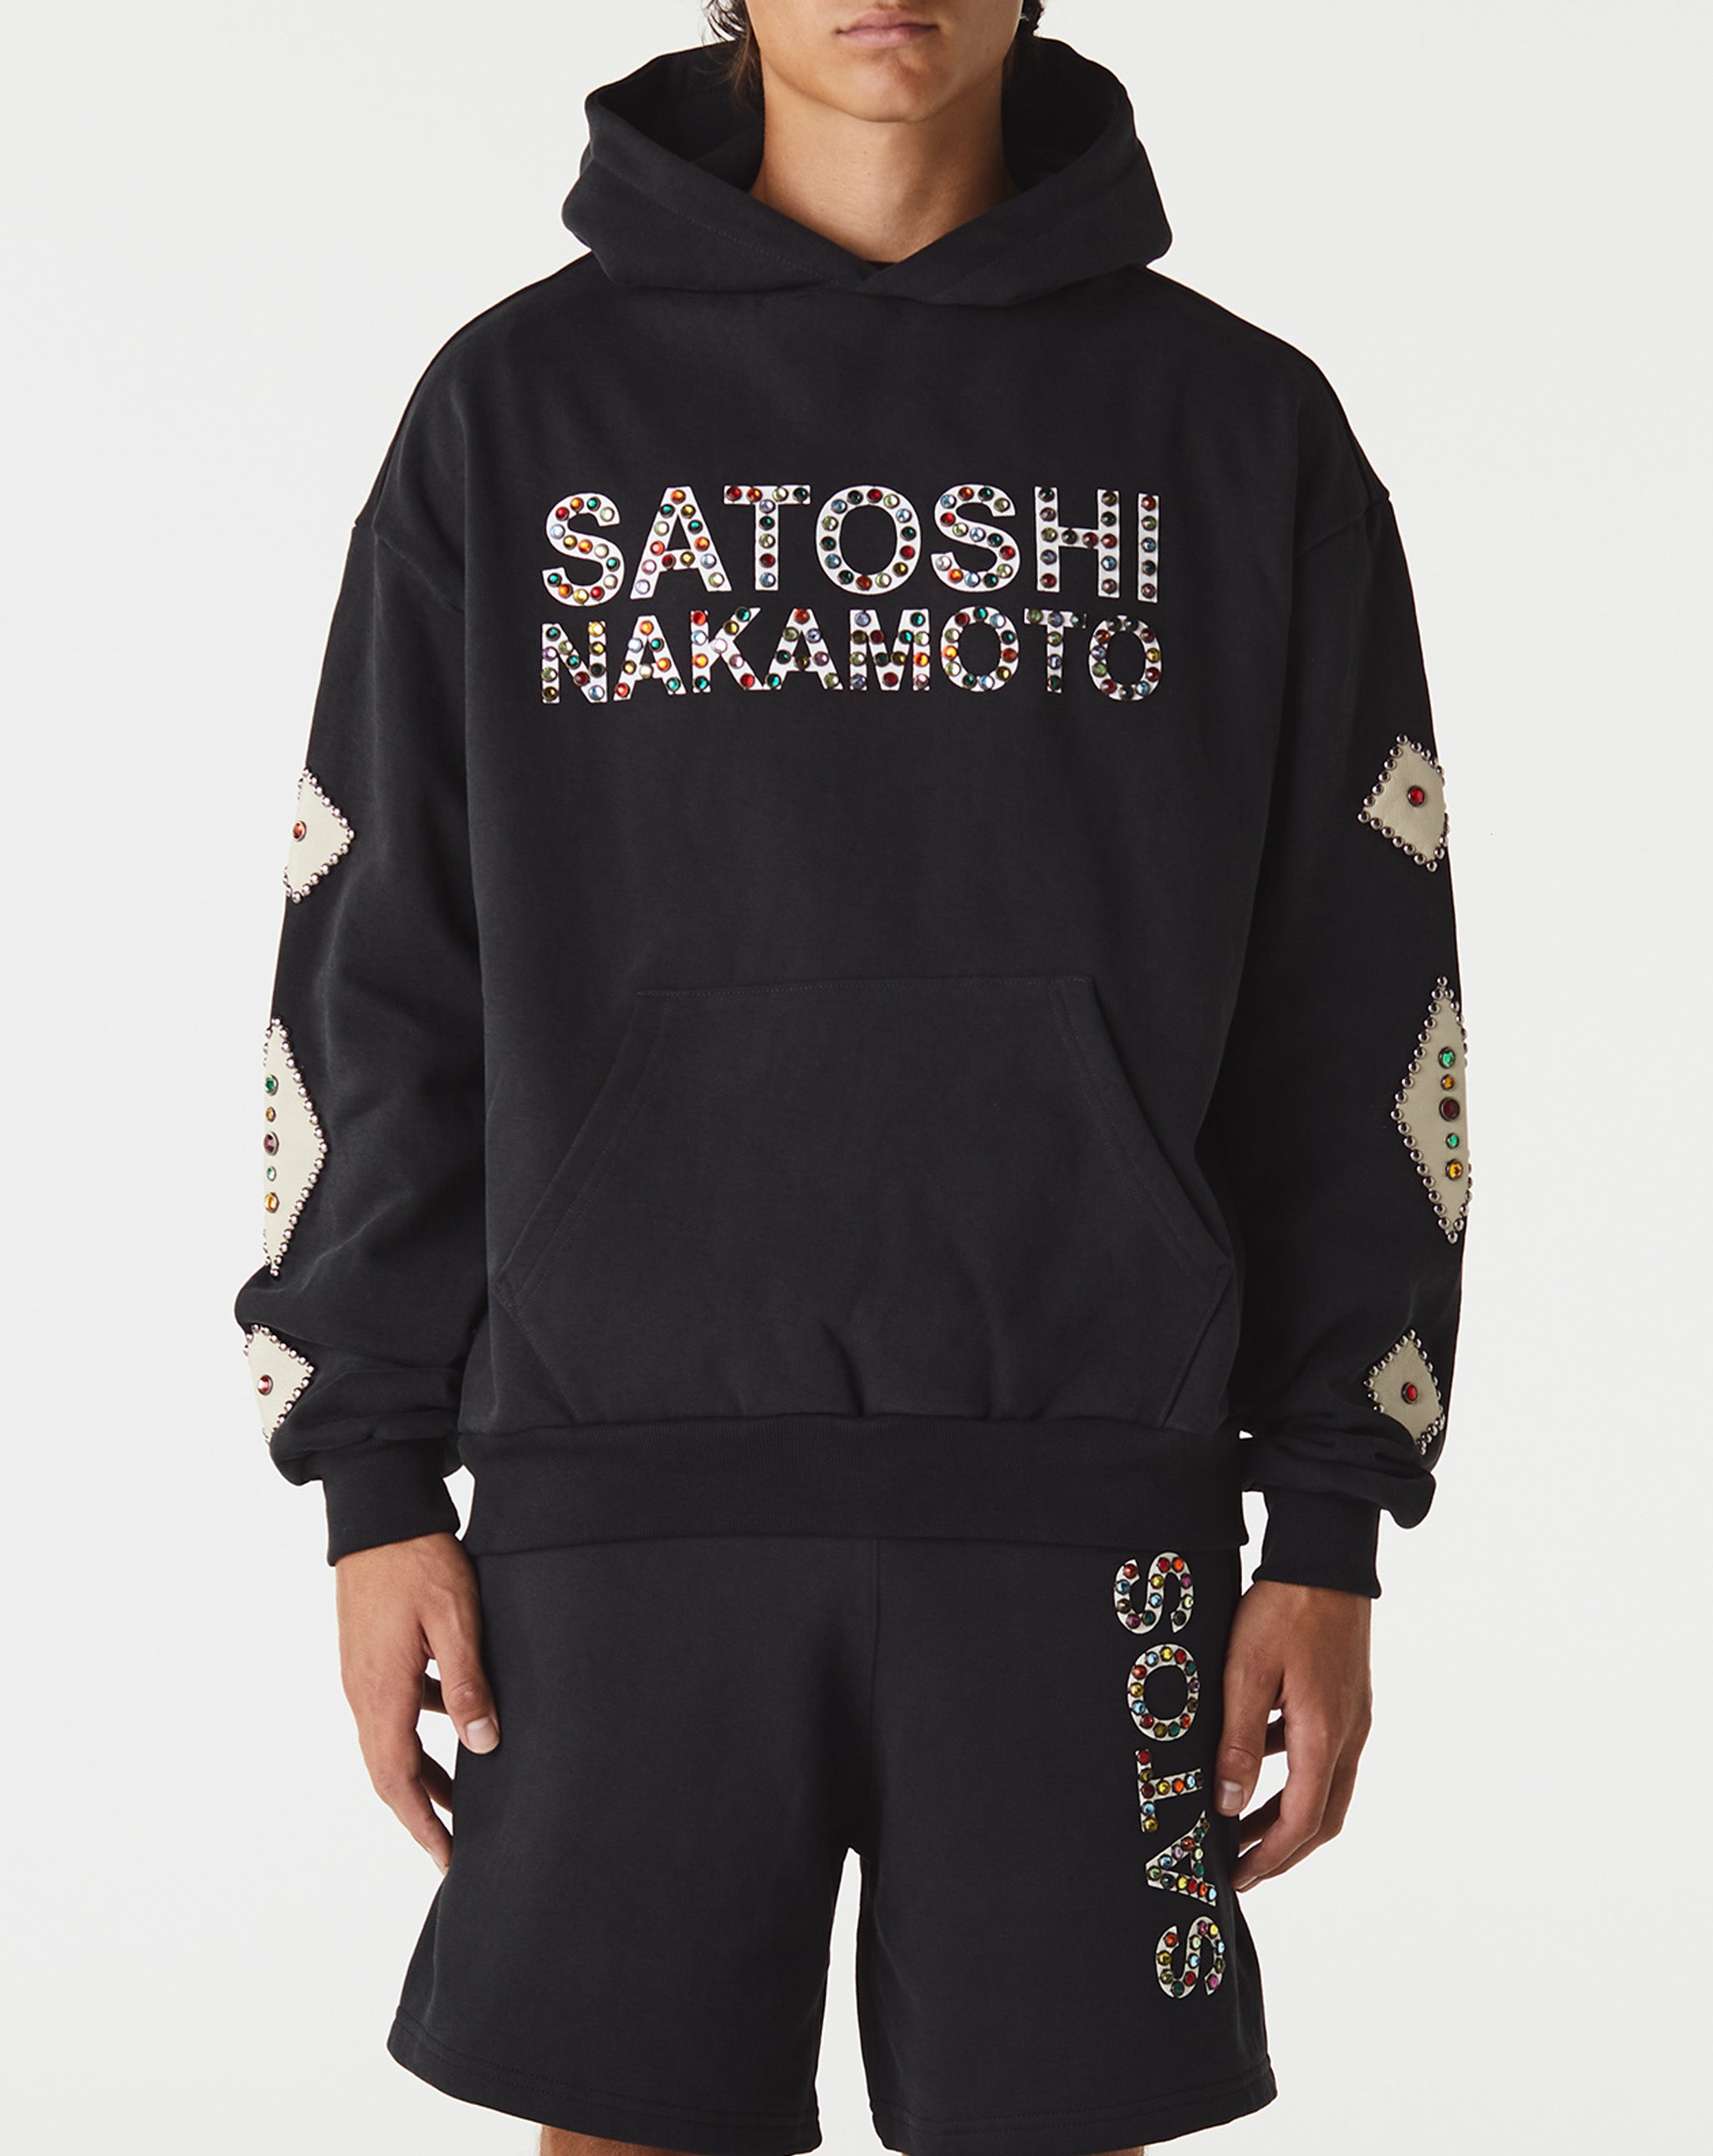 Satoshi Nakamoto Sweaters & Sweatshirts  - Cheap Erlebniswelt-fliegenfischen Jordan outlet